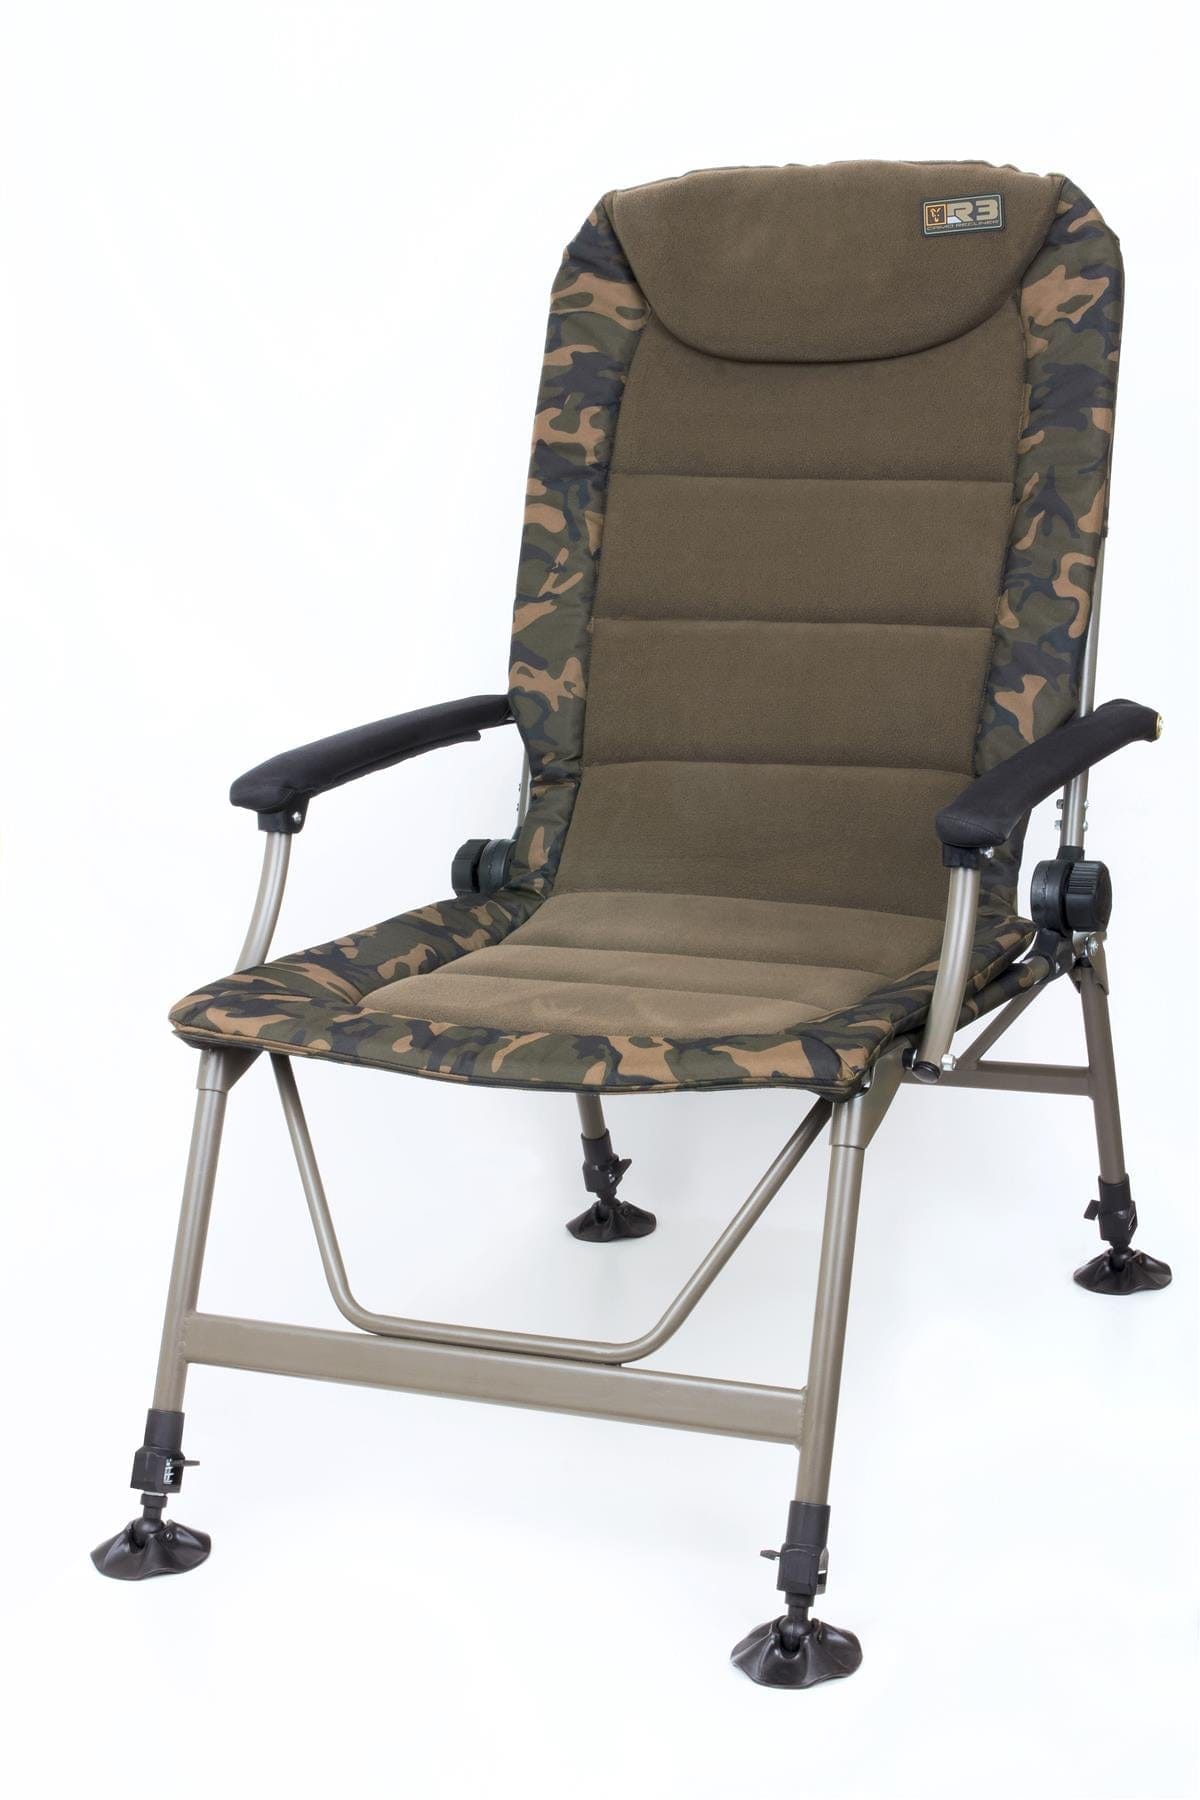 FOX R-Series Camo Chairs.